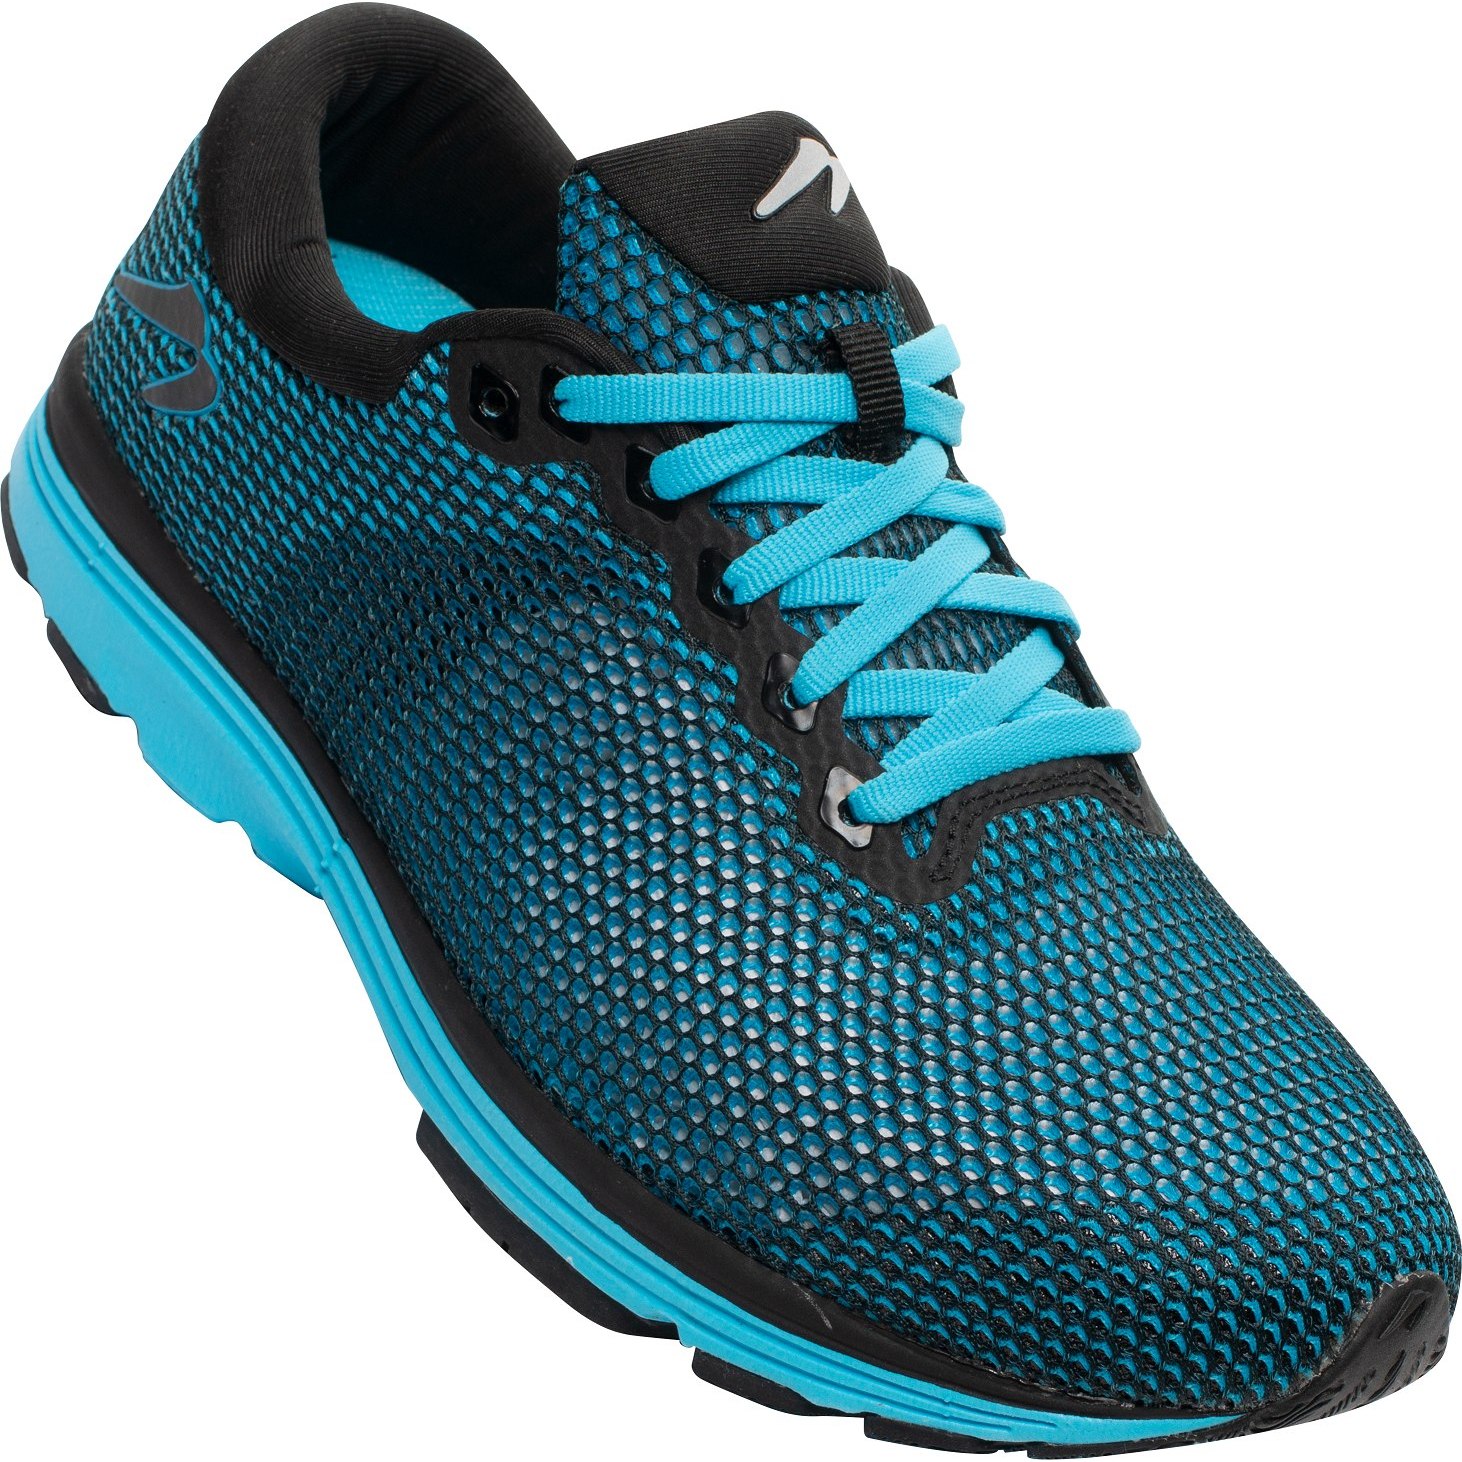 Productfoto van Newton Running Catalyst Running Shoes - azure/black